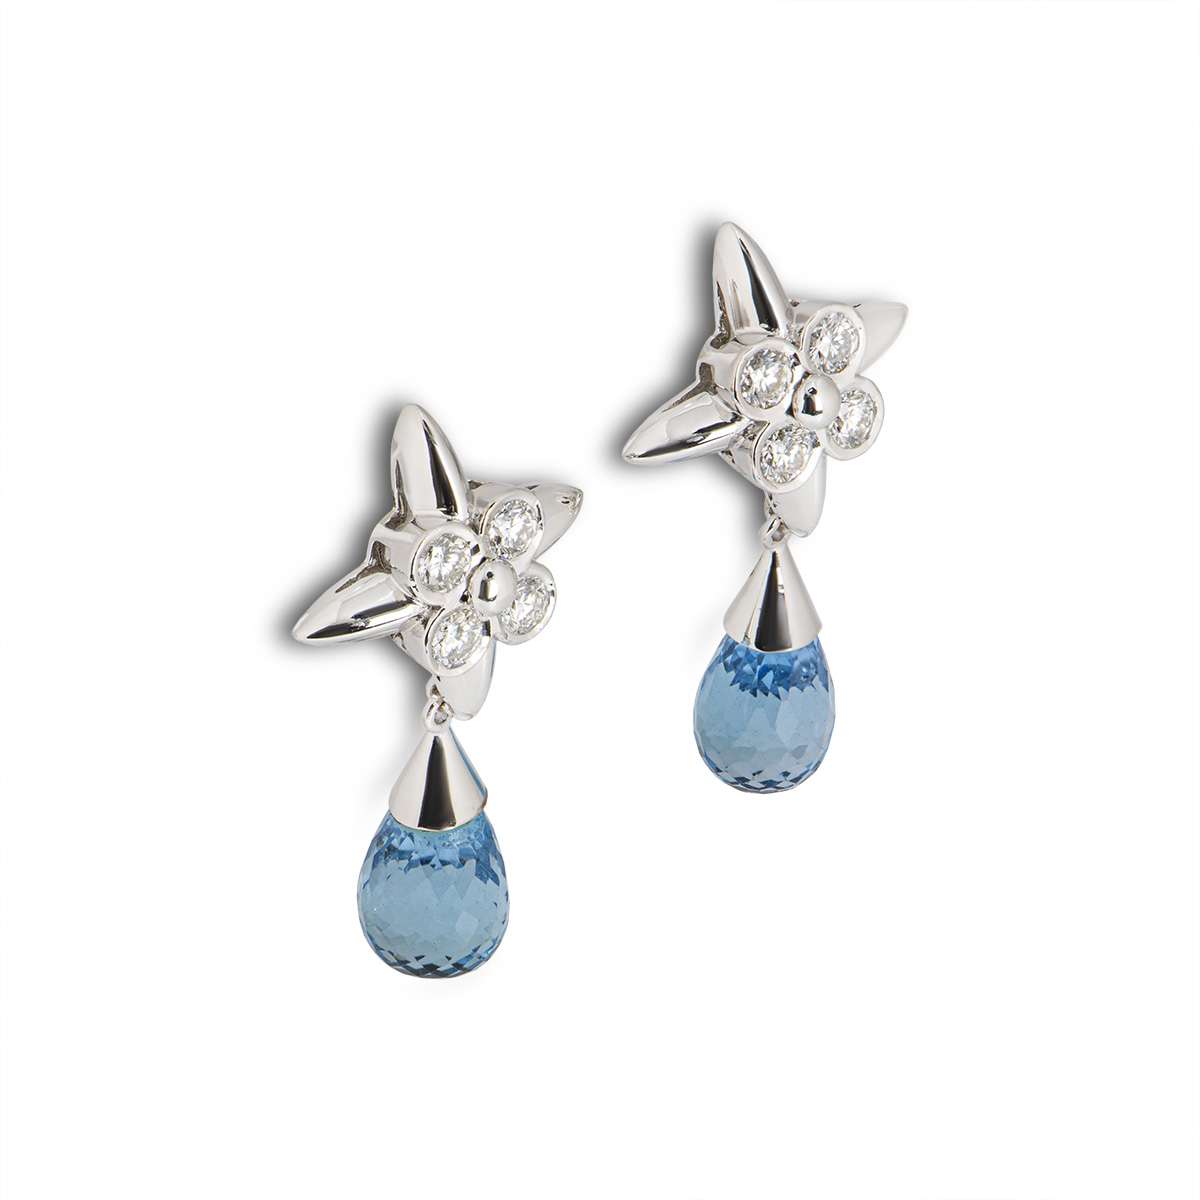 White Gold Diamond and Blue Topaz Drop Earrings